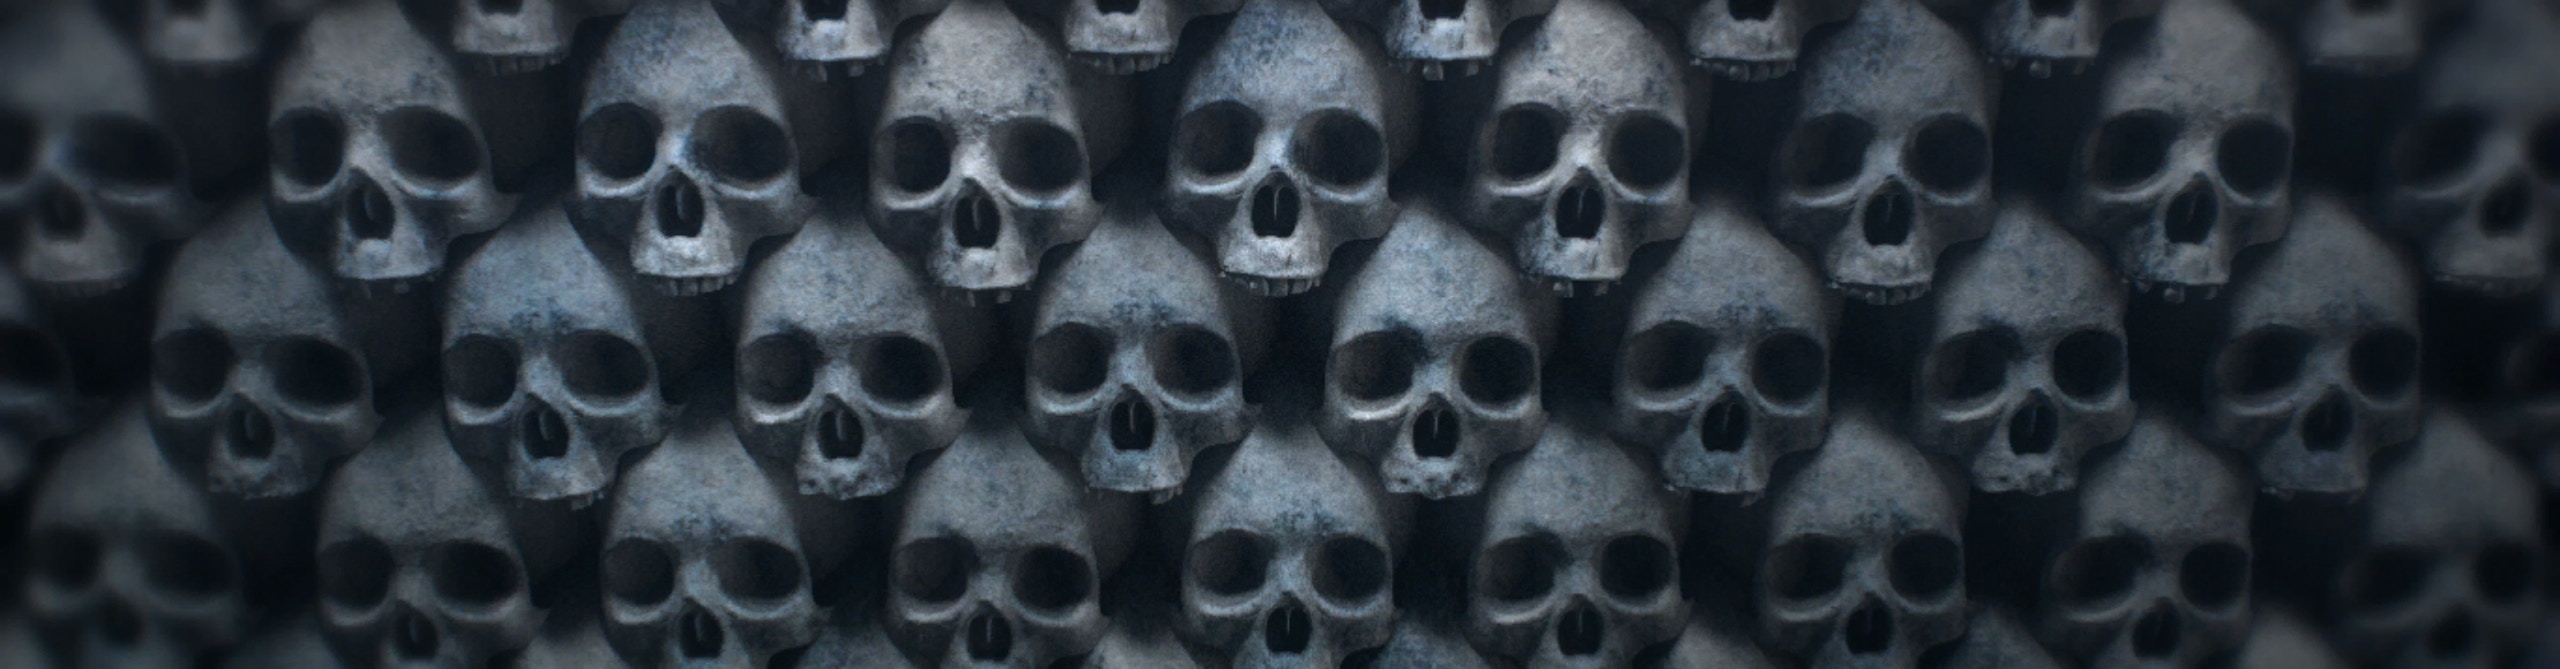 Black Sabbath The End skull wall